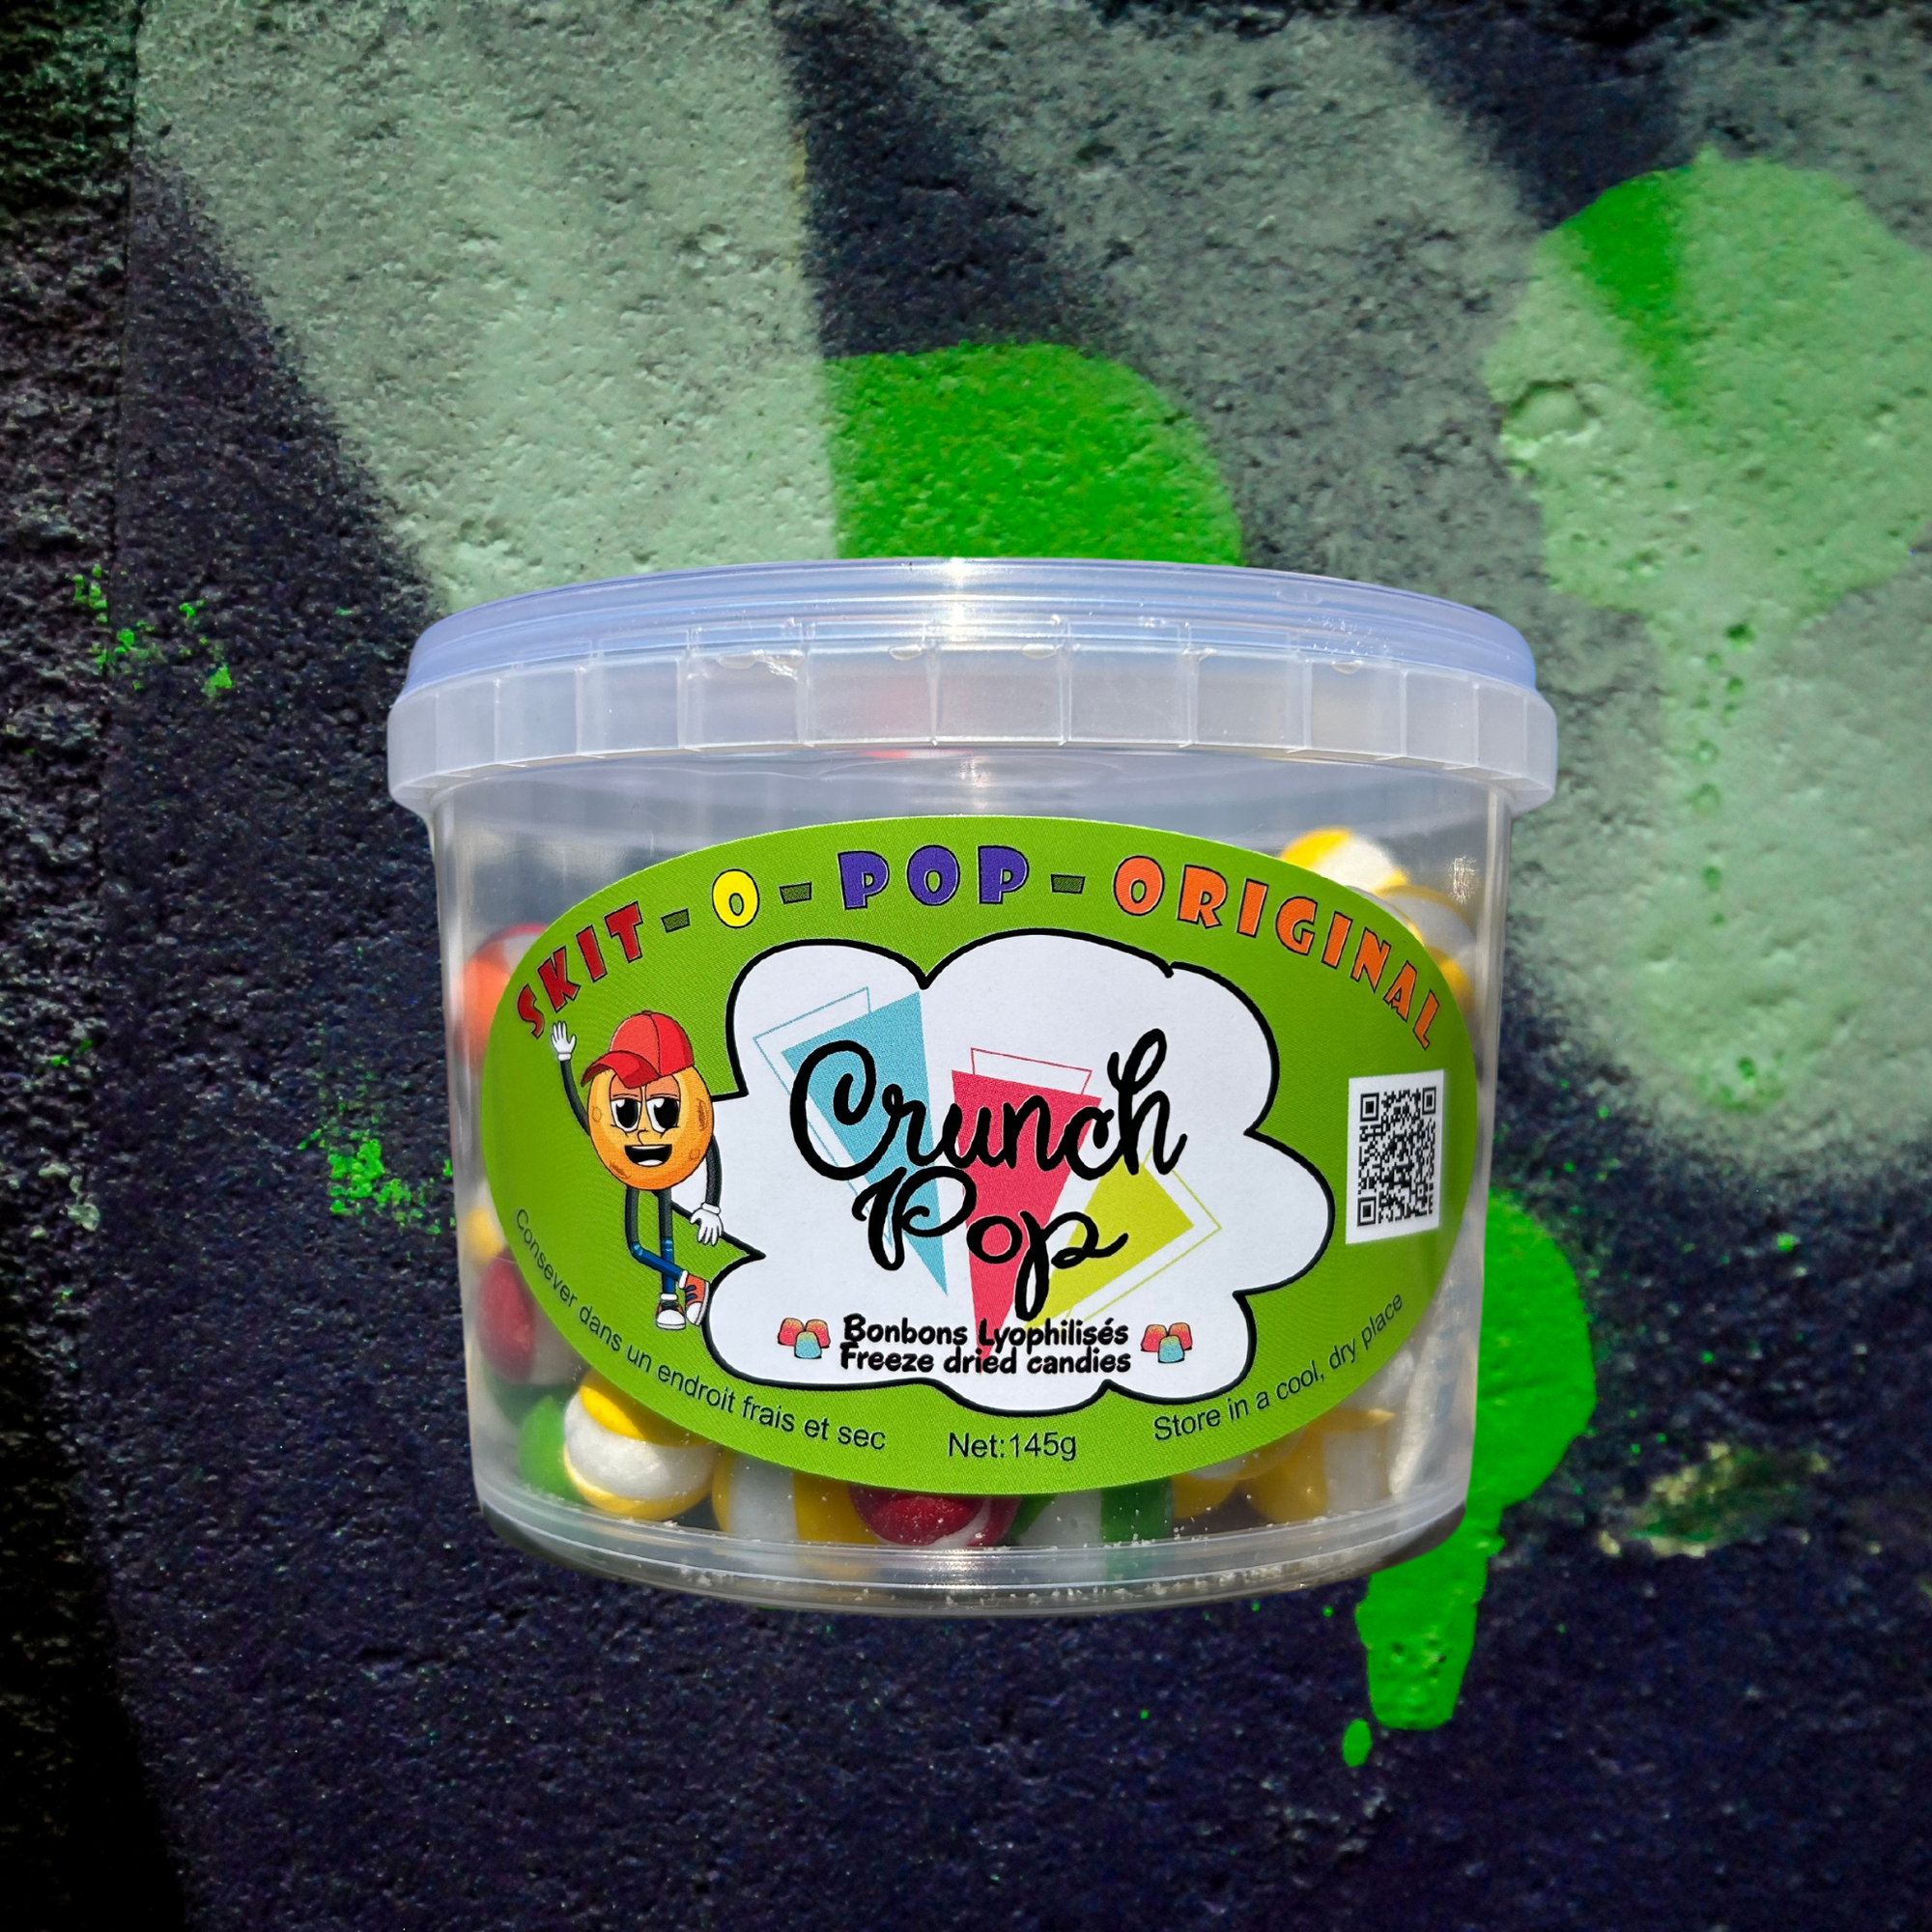 Bonbons Lyophilisés CrunchPop - Skit-o-Pop Original (Skittles)